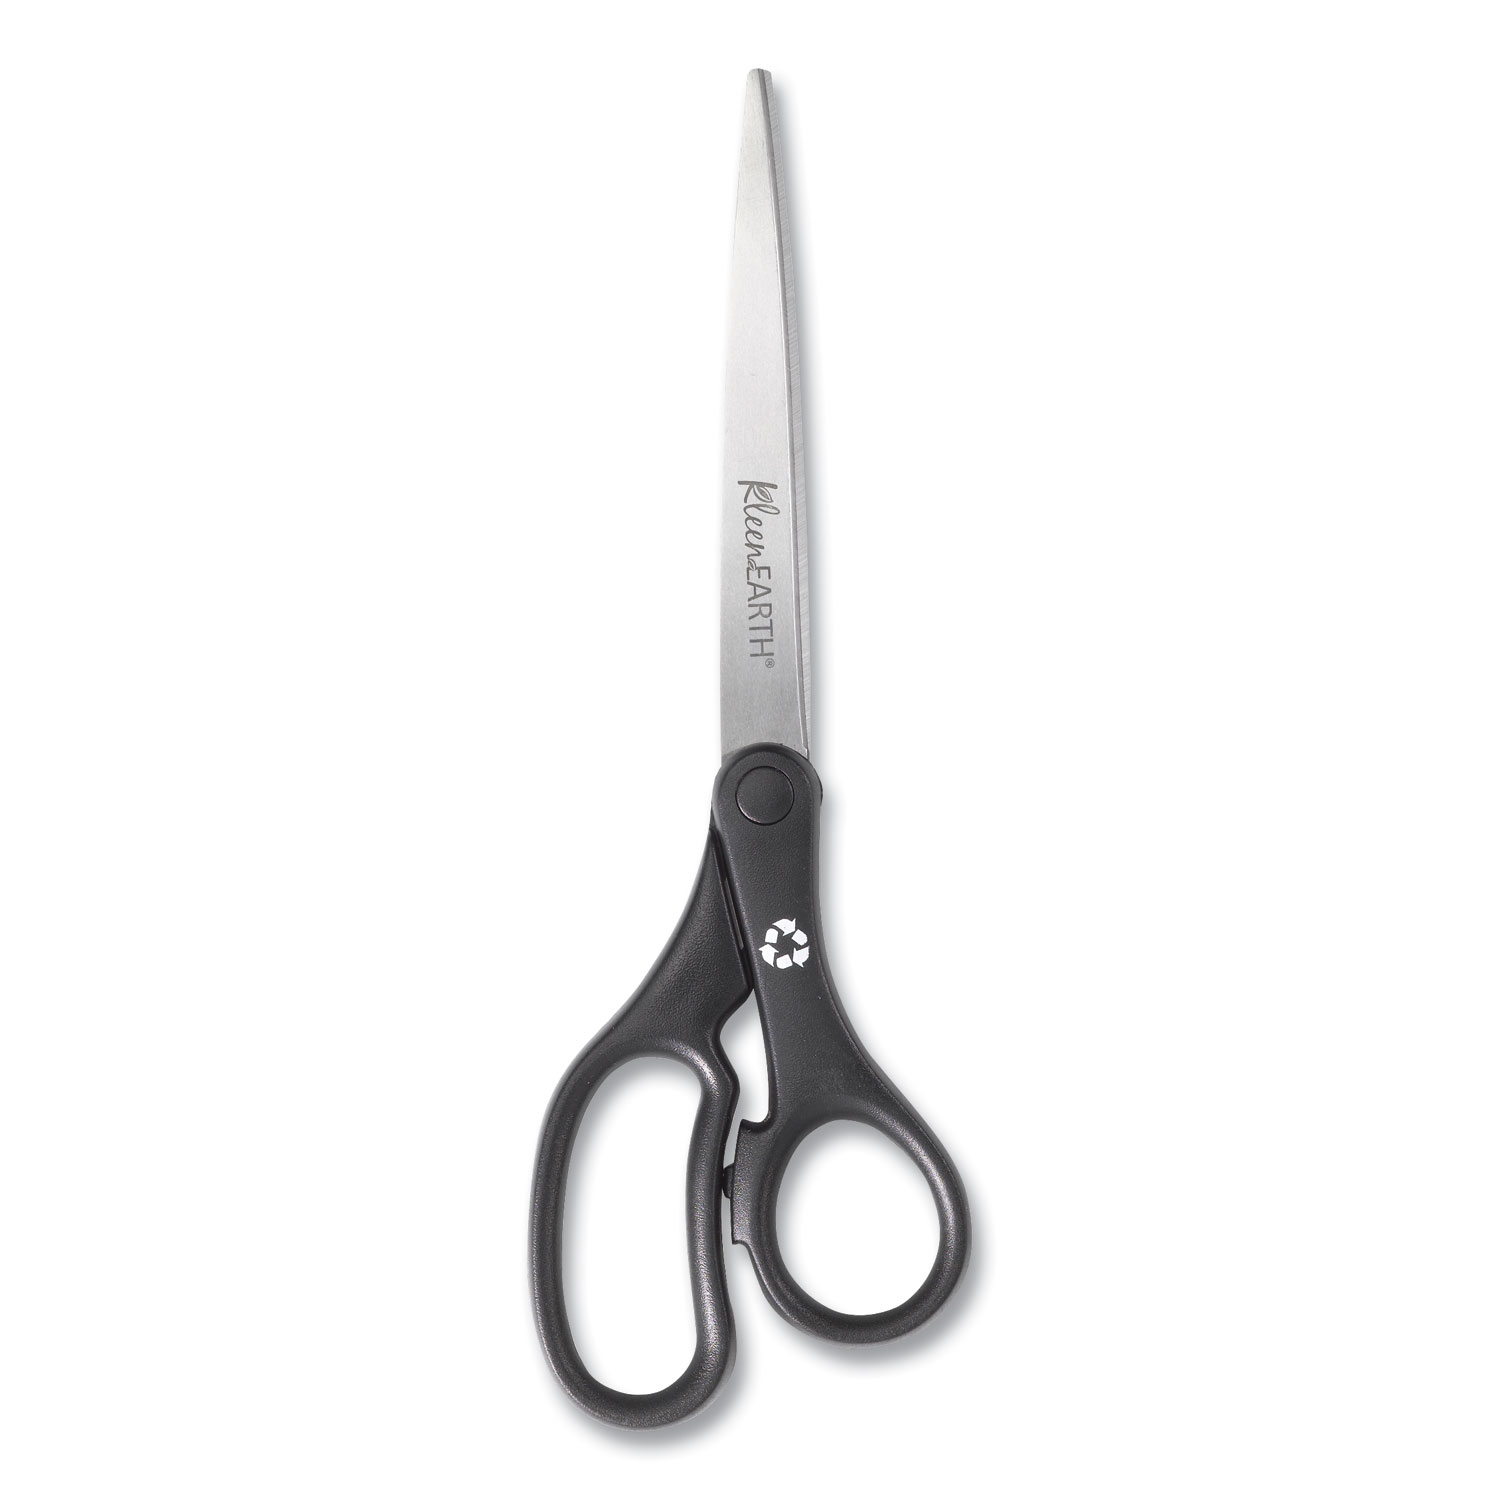  Westcott 15586 KleenEarth Basic Plastic Handle Scissors, 9 Long, 4.25 Cut Length, Black Straight Handle (ACM15586) 